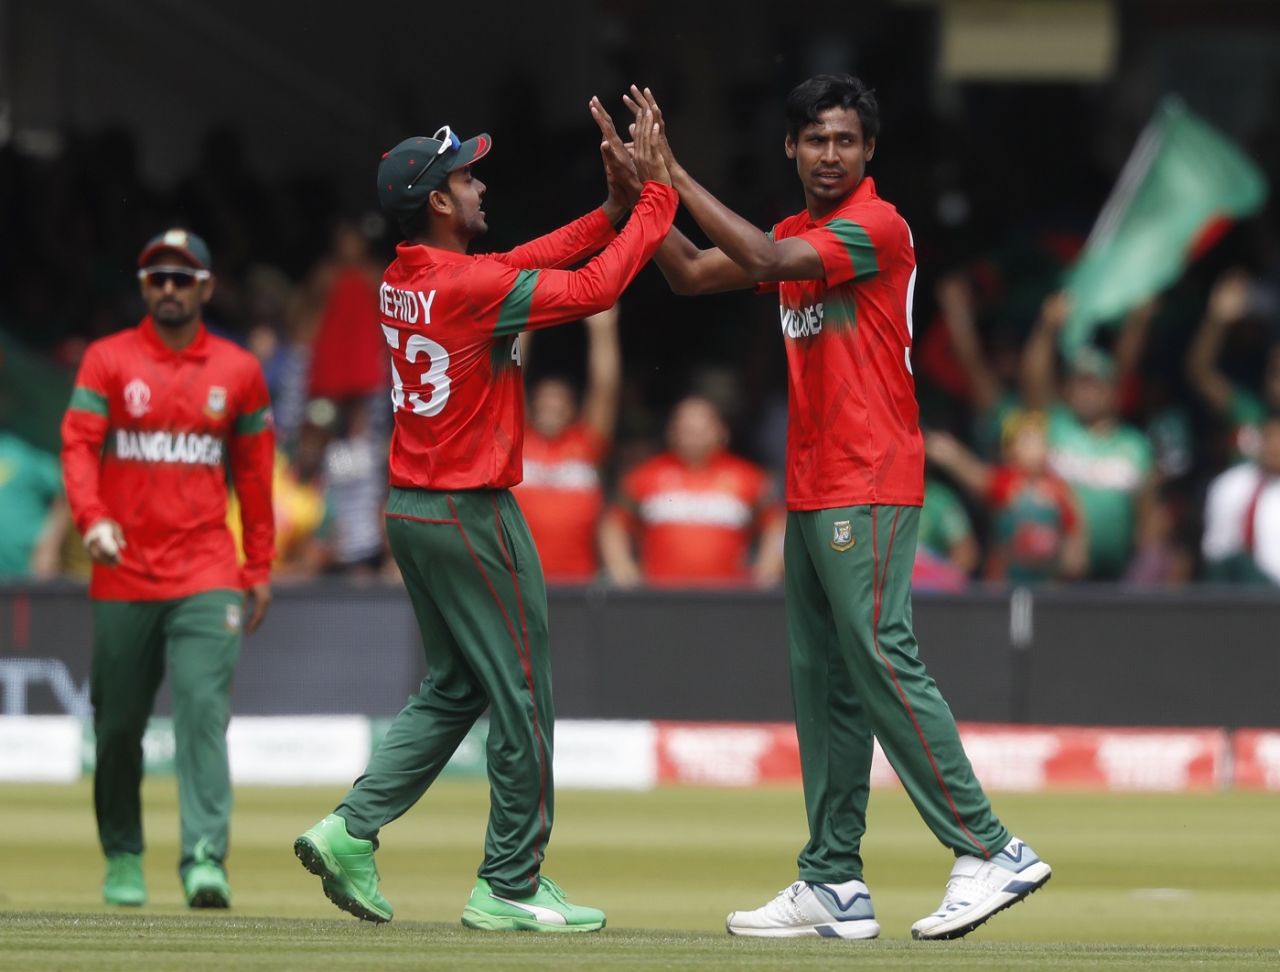 Mustafizur Rahman celebrates after taking the wicket of Haris Sohail, Bangladesh v Pakistan, World Cup 2019, Lord's, July 5, 2019